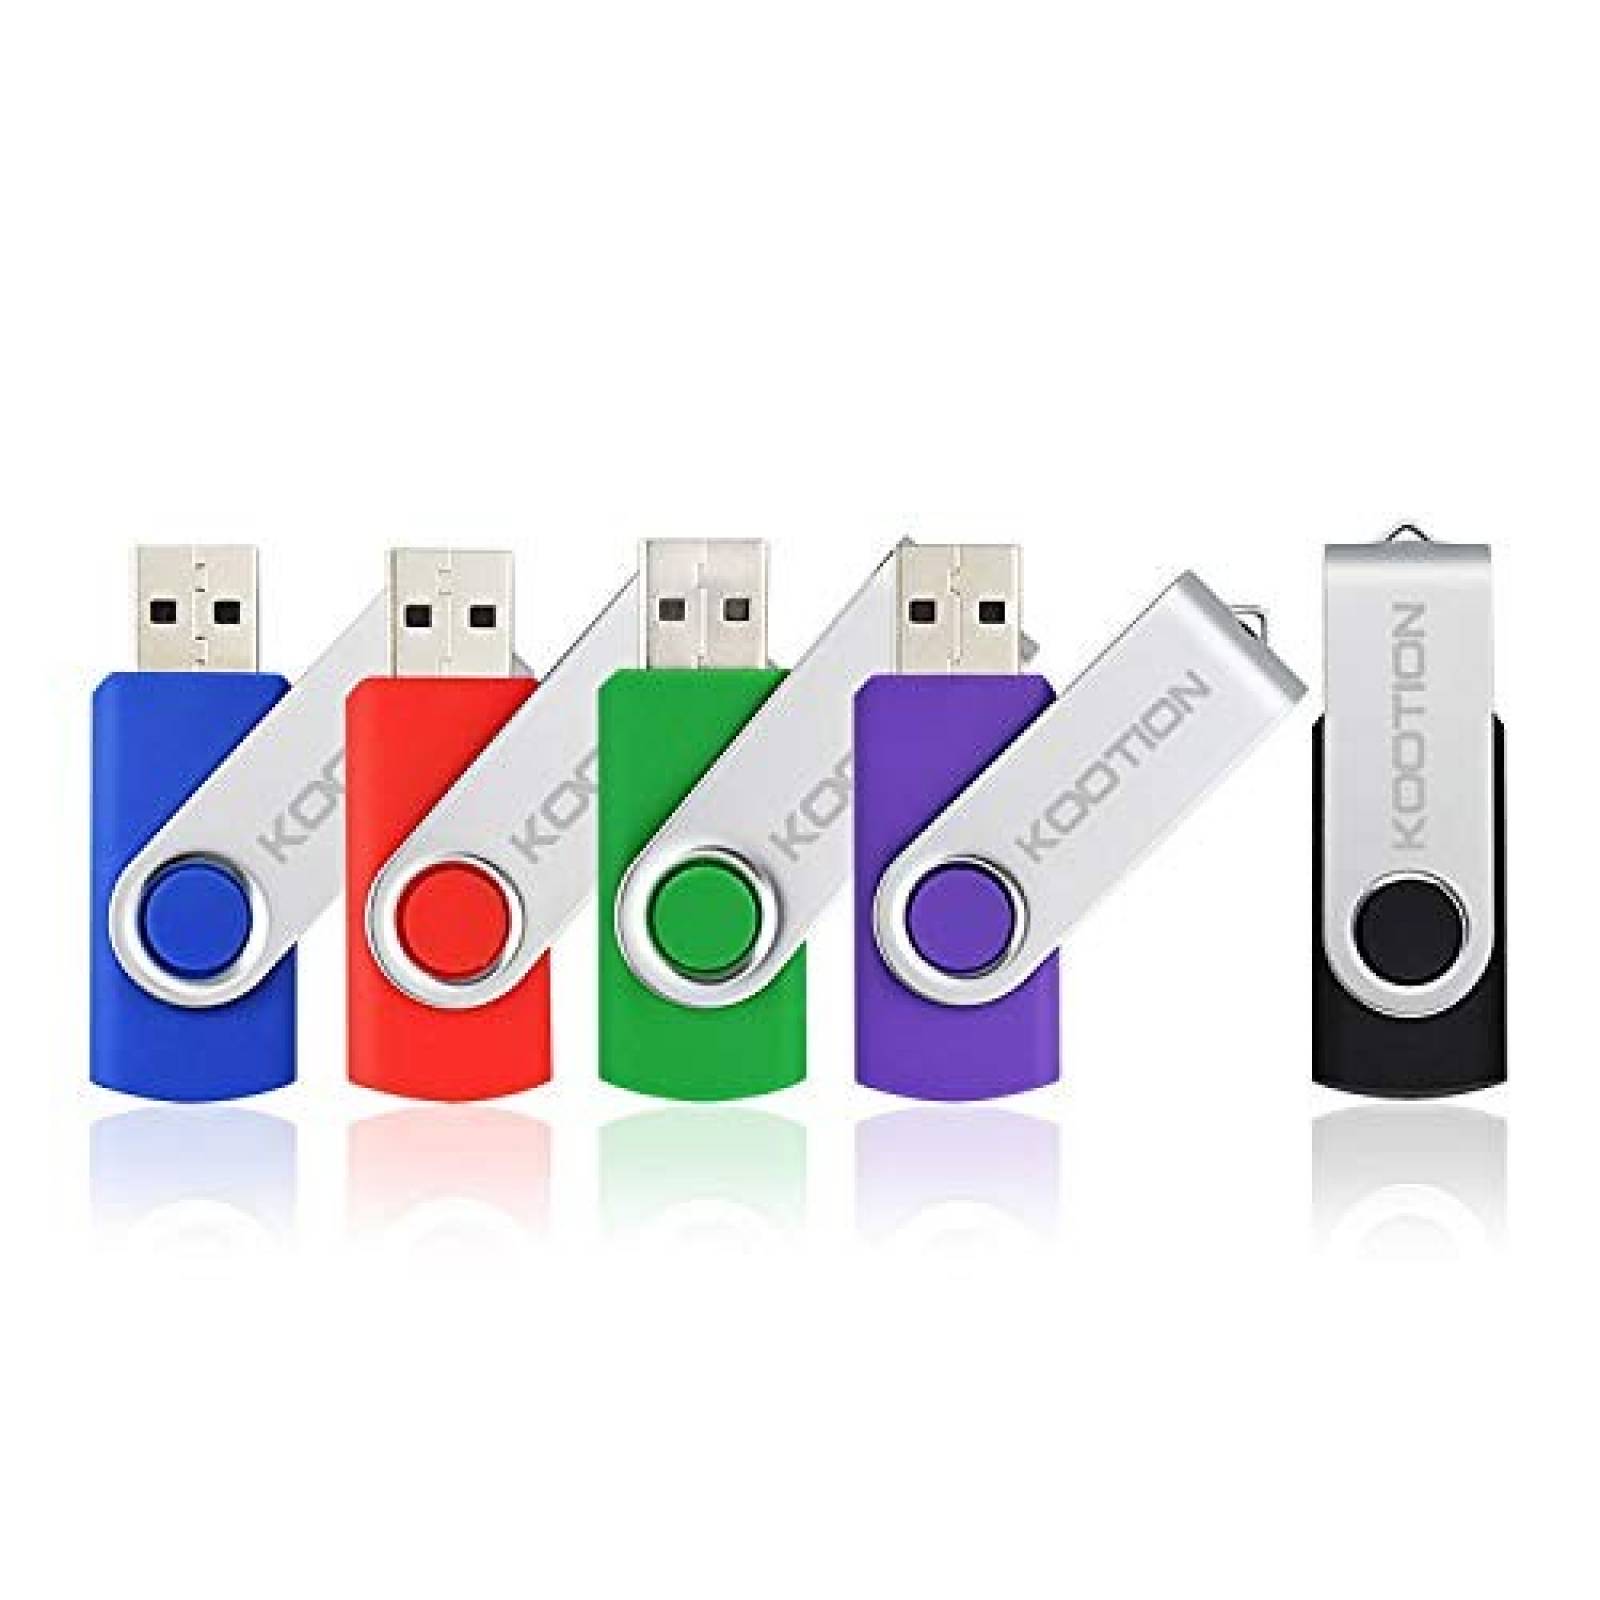 Memoria USB KOOTION USB Flash Drive 32 GB paquete de 5